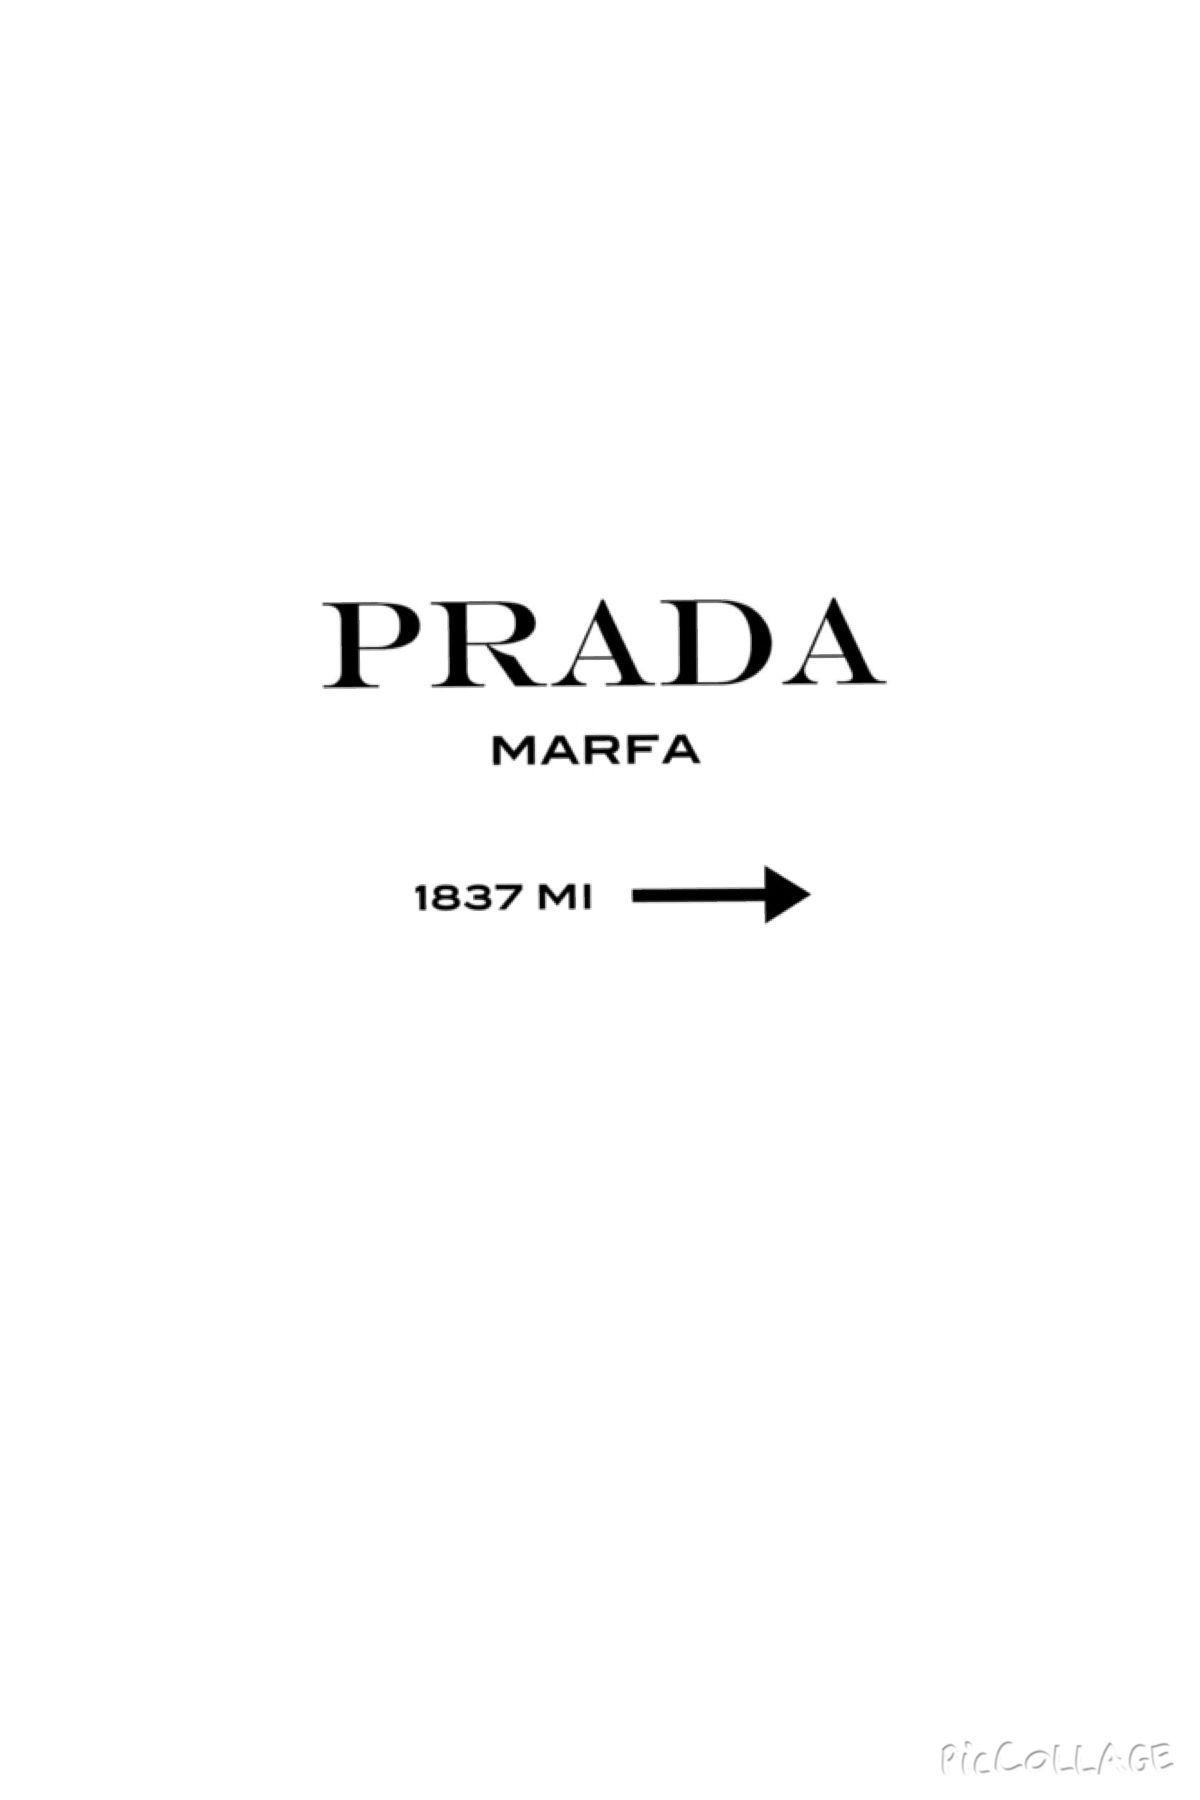 Prada Marfa Milano iphone wallpaper. Crafts. Prada